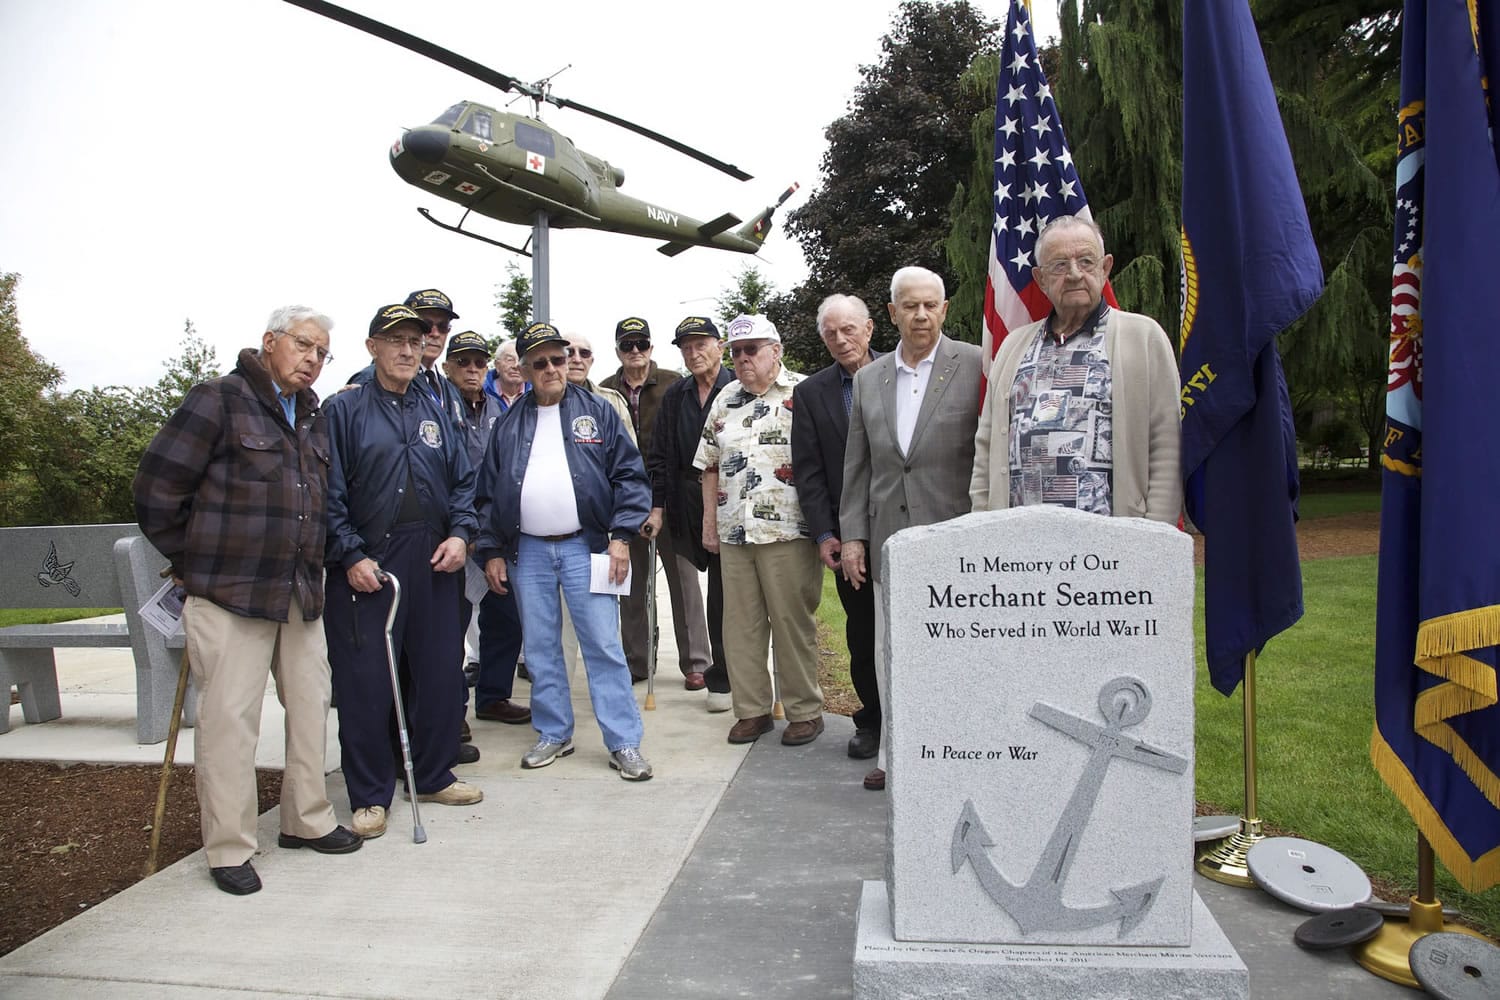 Thirteen former Merchant Marine sailors gather Wednesday to remember the seamen lost in World War II.